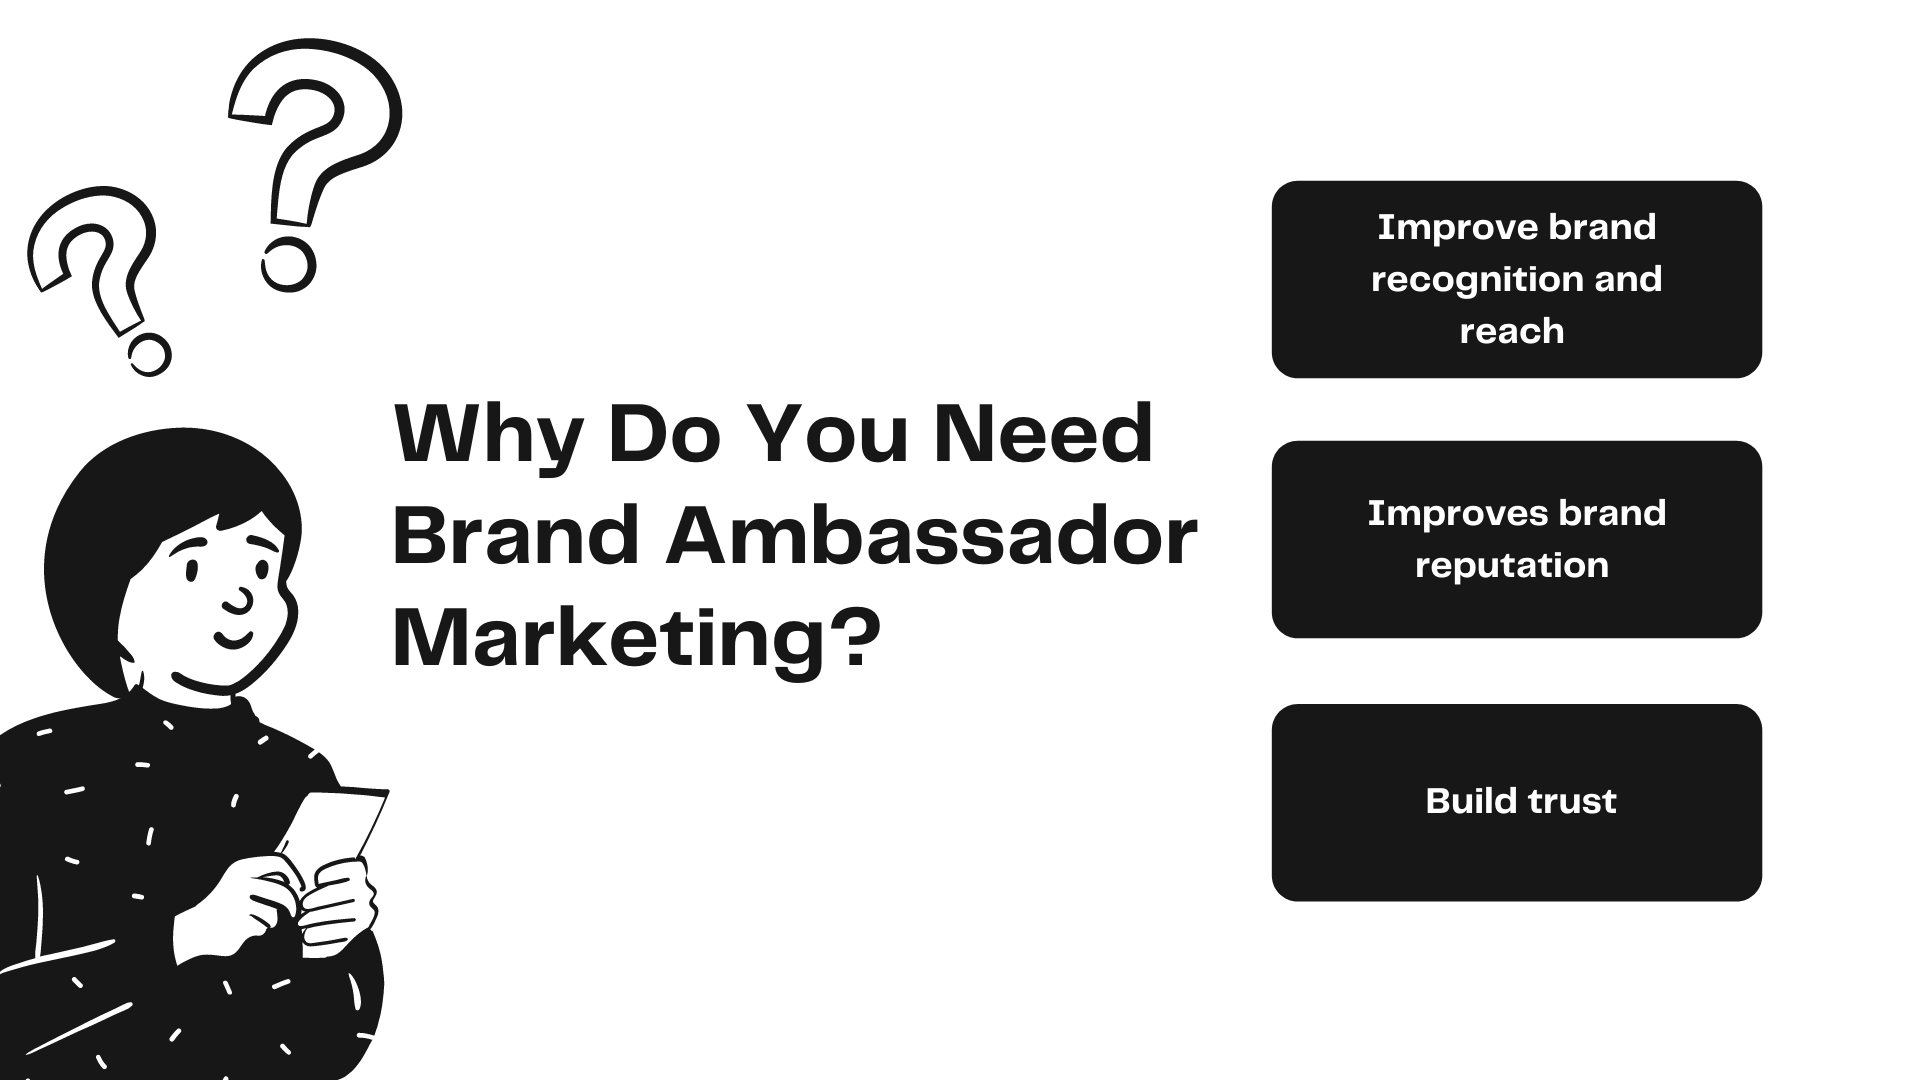 Why do you need brand ambassador marketing